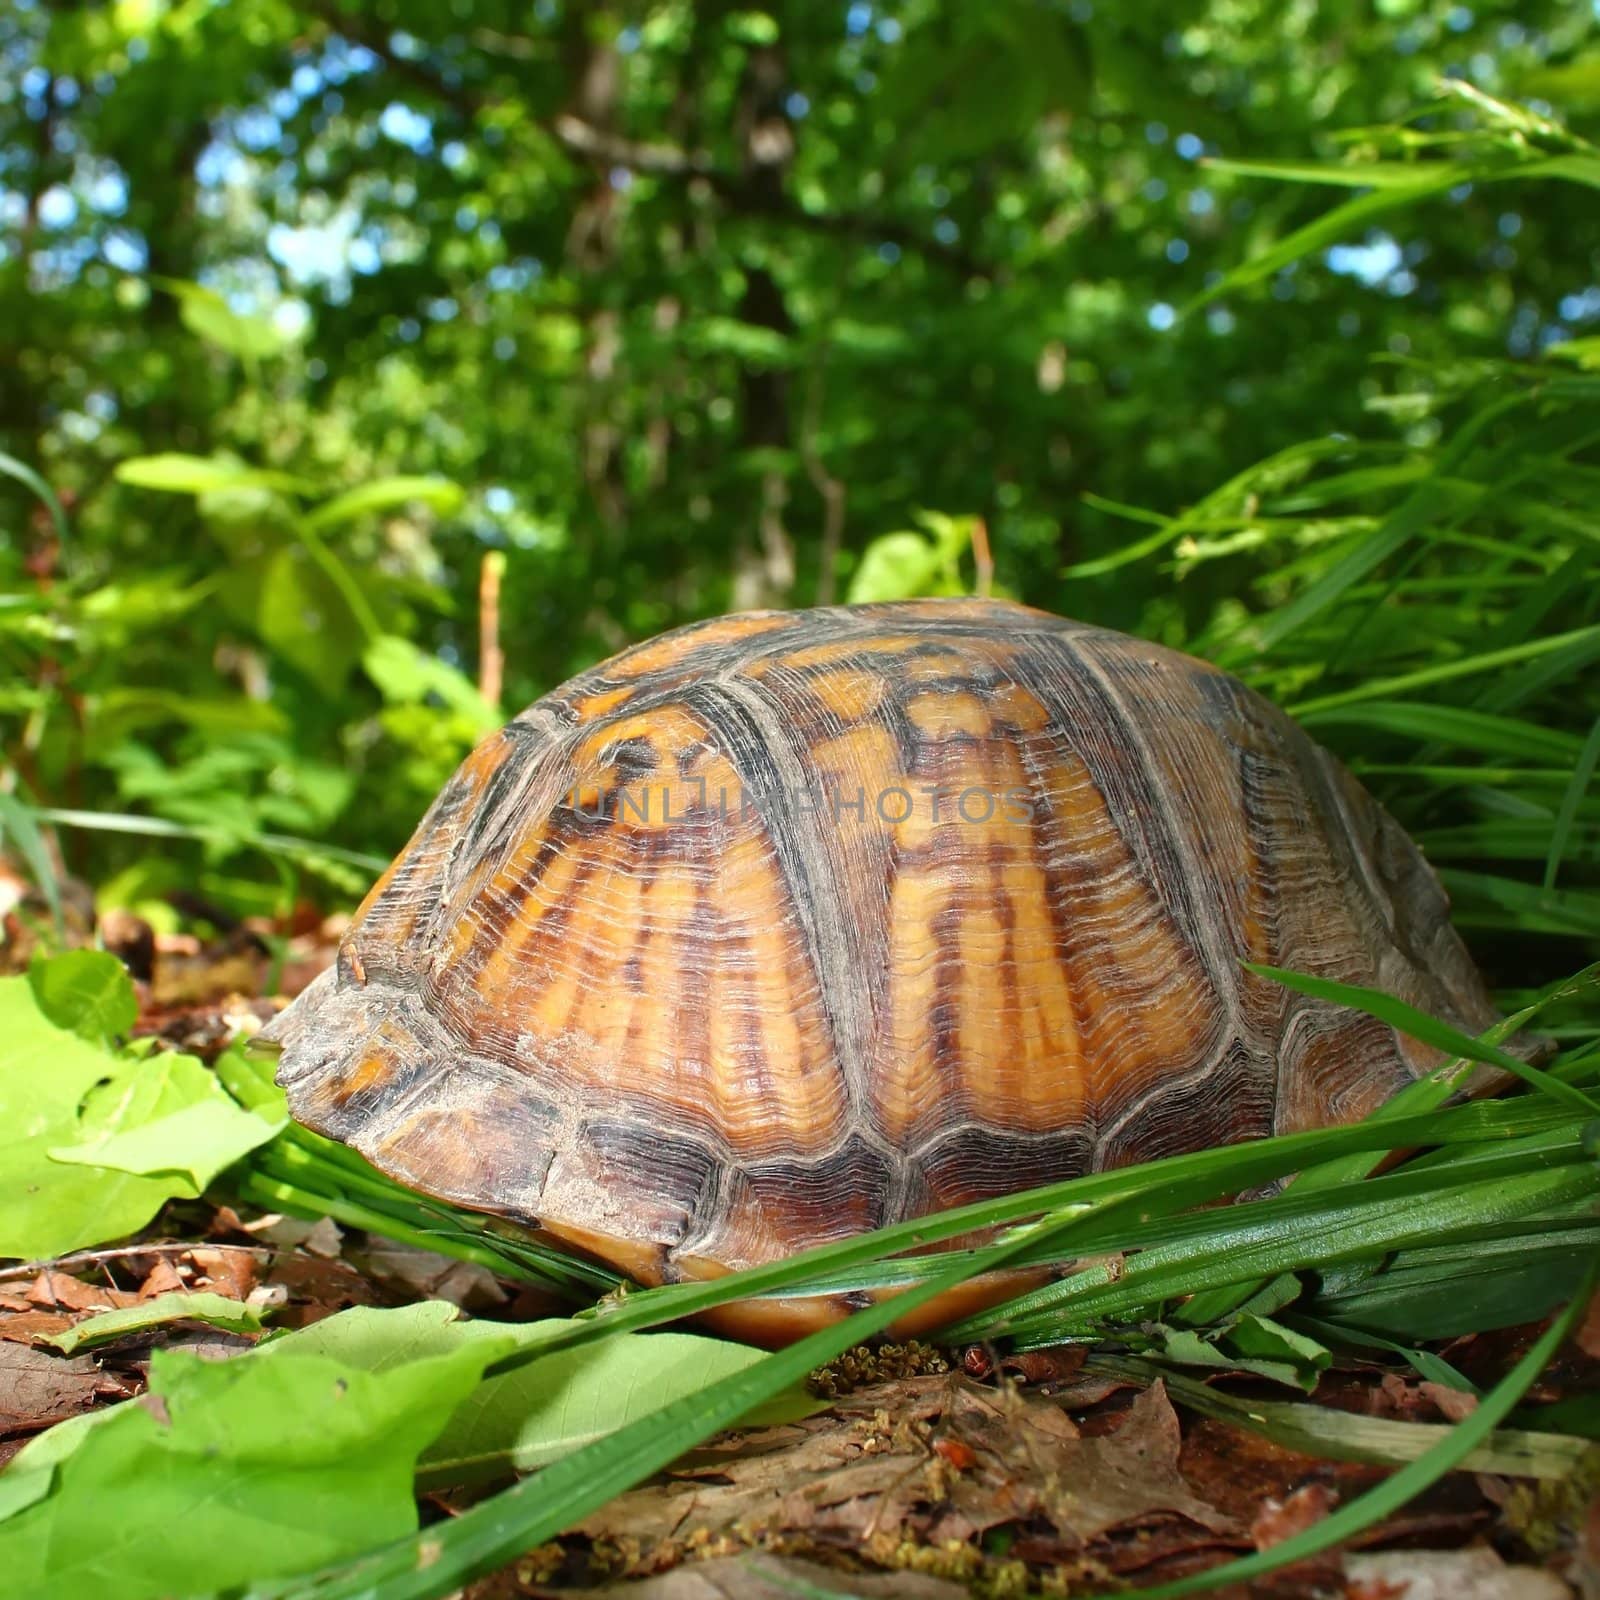 Box Turtle (Terrapene carolina) by Wirepec